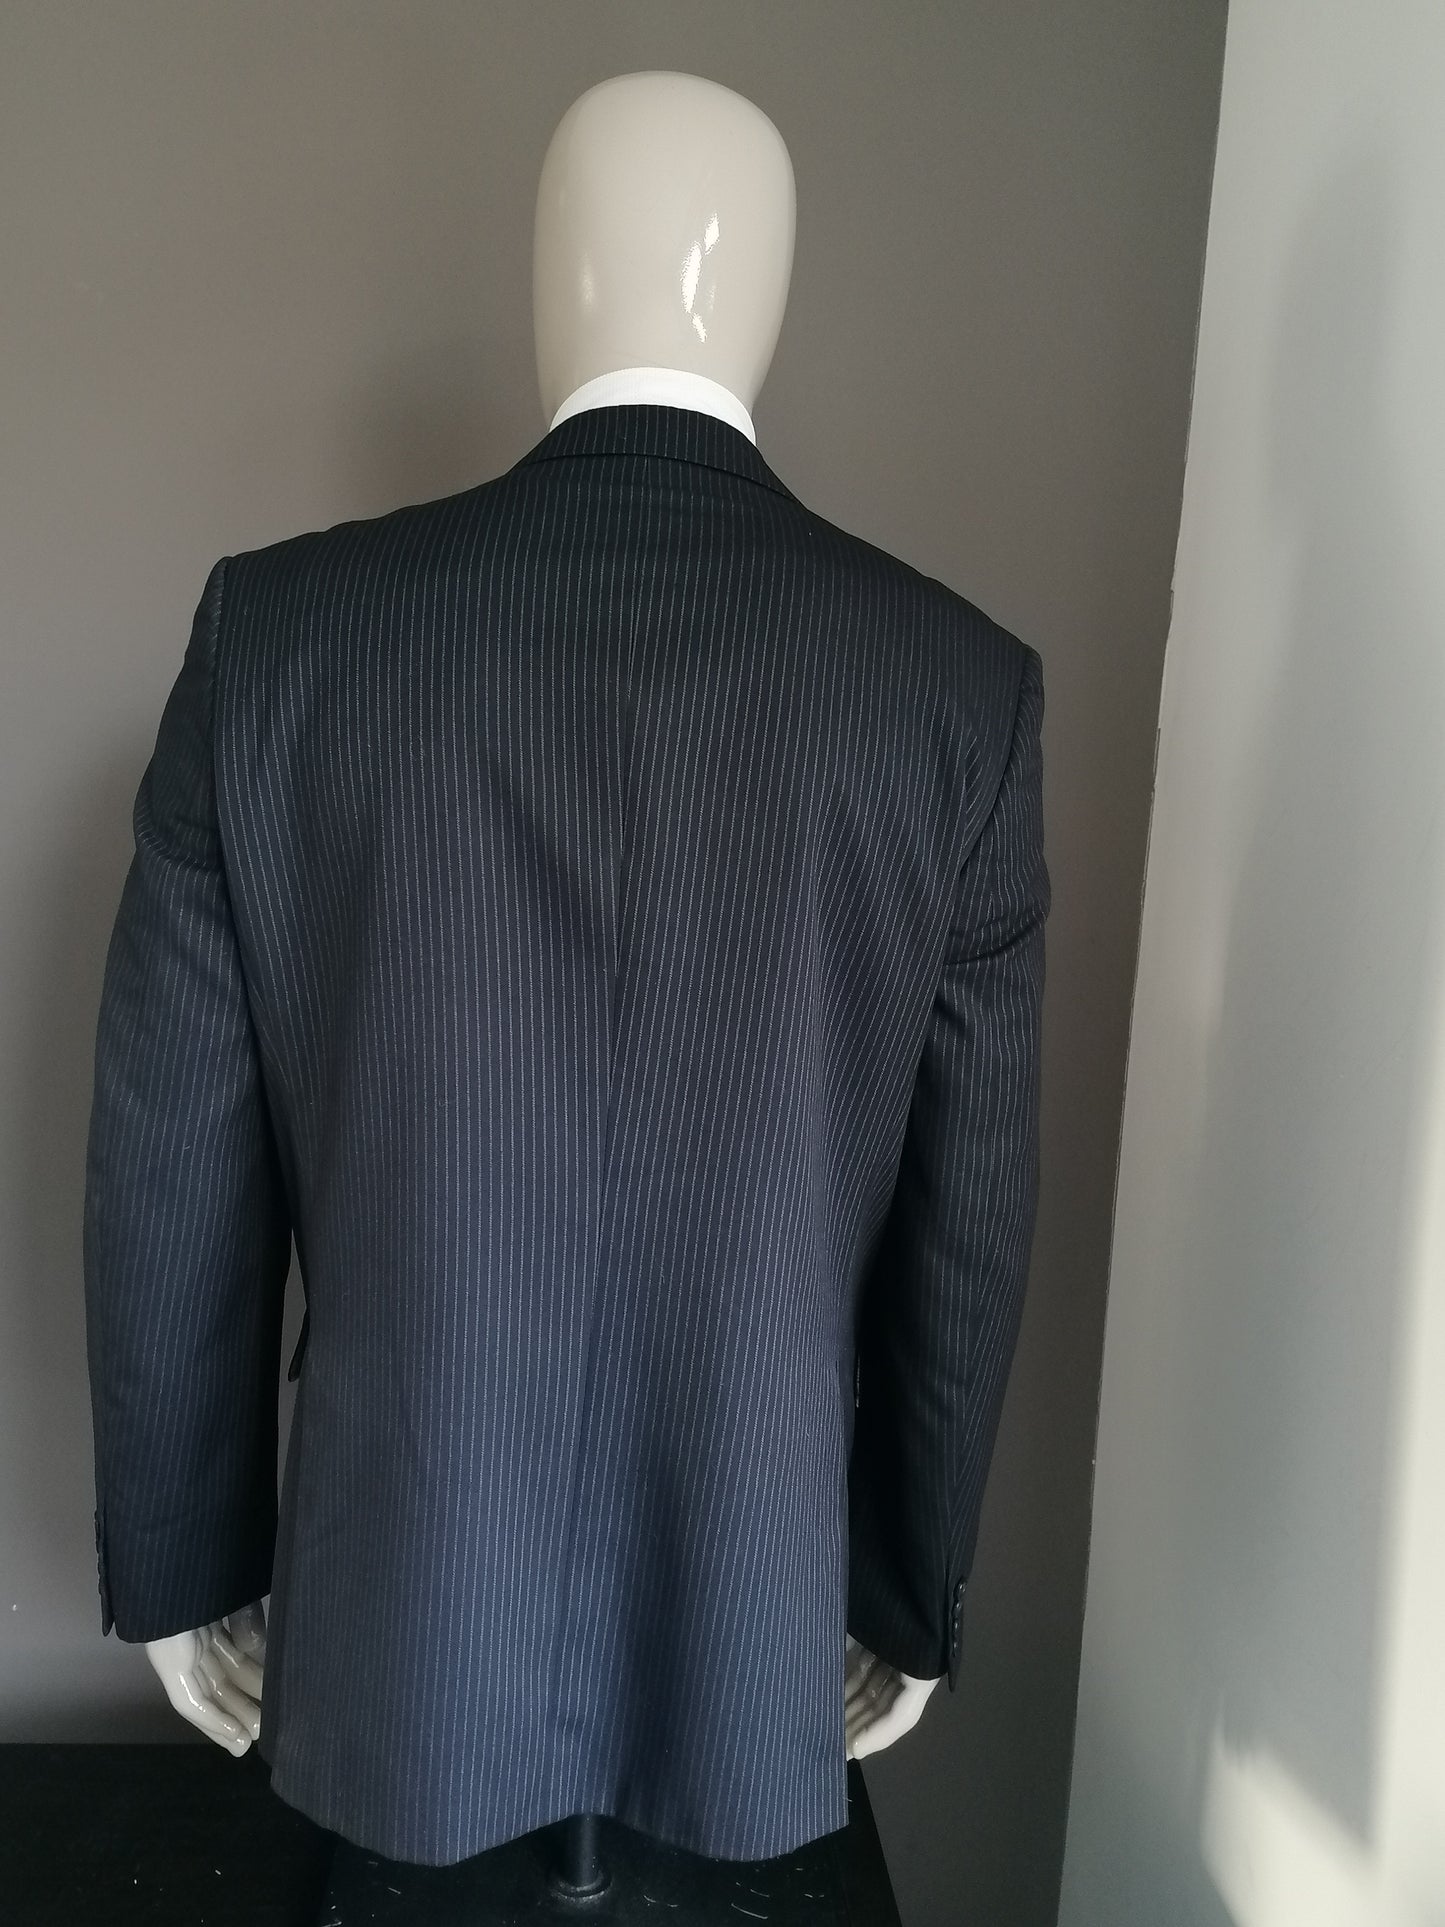 Next SP jacket. Black gray striped. Size 52 / L.